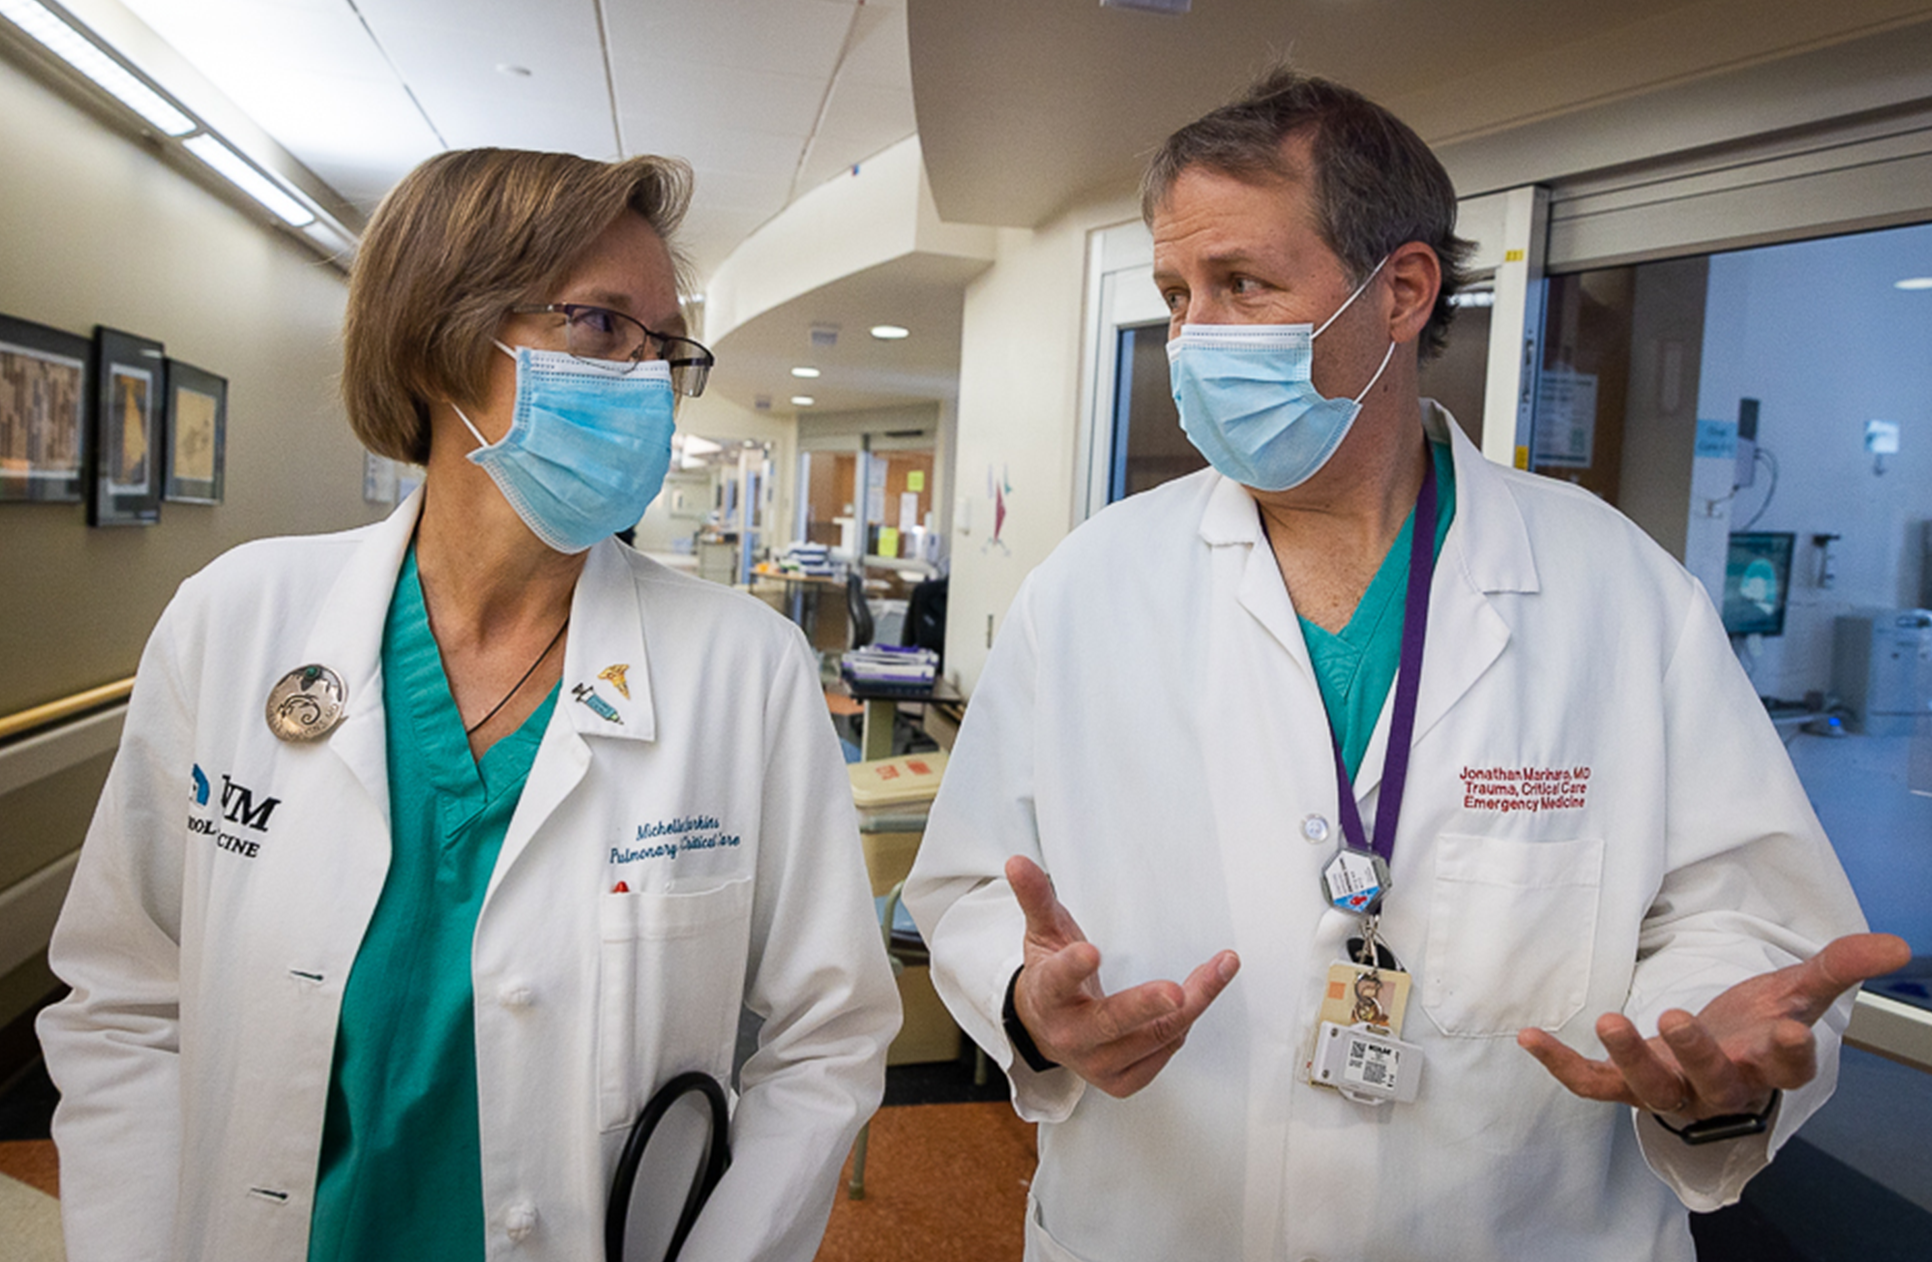 Michelle Harkins (left) and Jon Marinaro (right) walk through a hospital emergency room